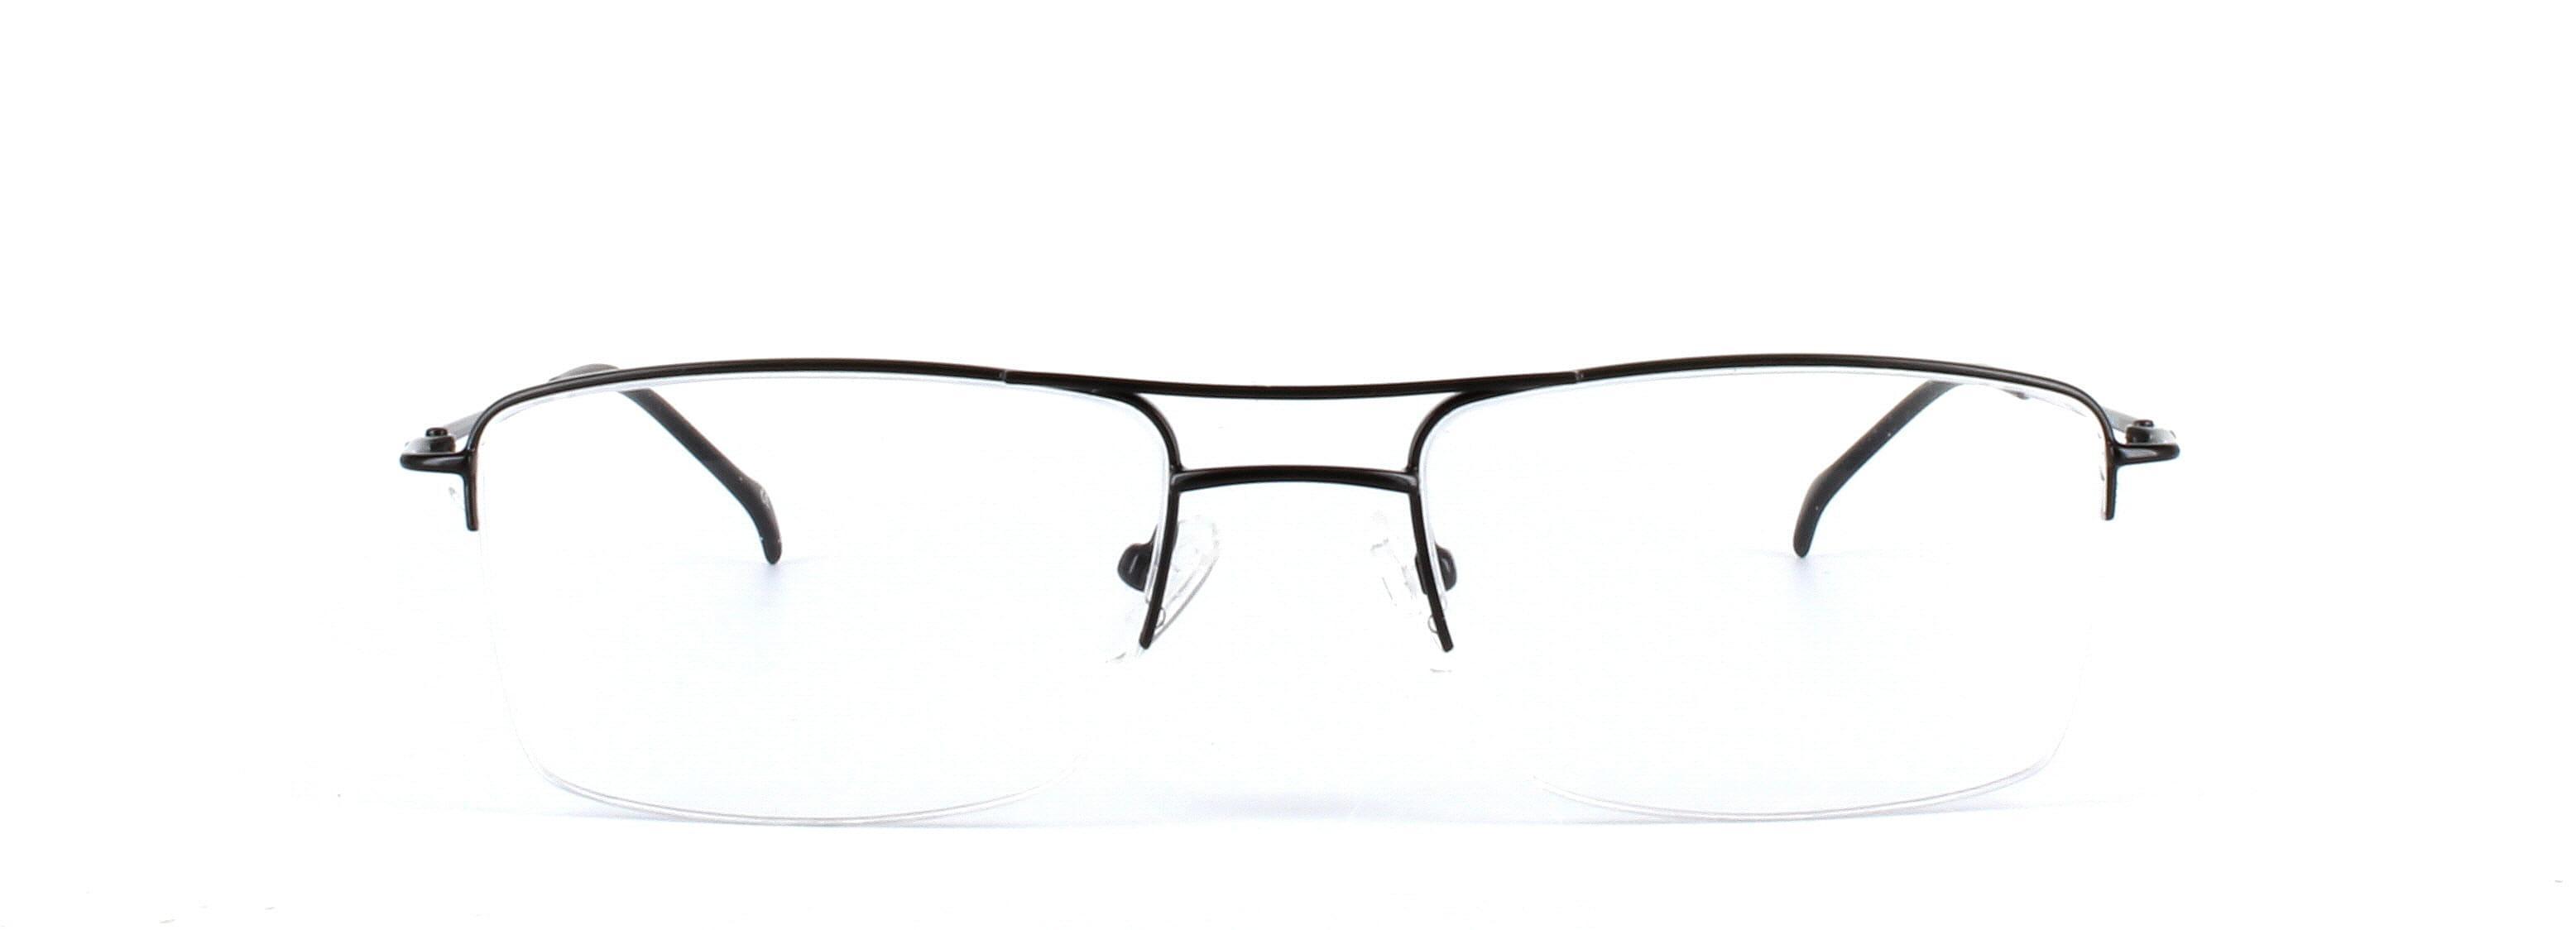 Oklahoma Black Semi Rimless Metal Glasses - Image View 5